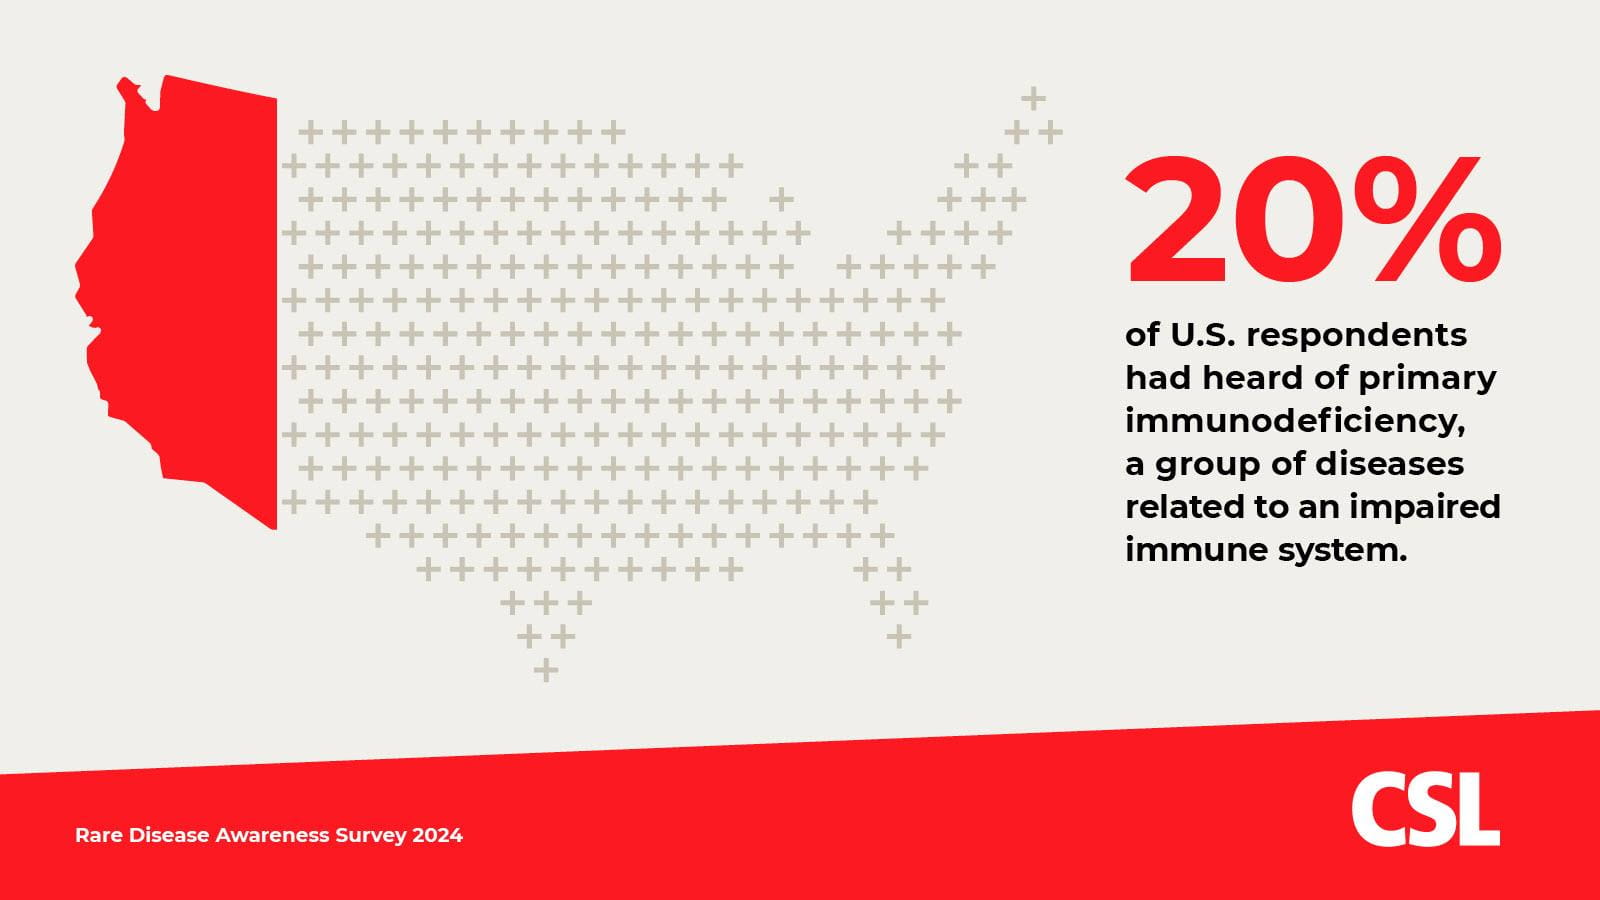 20% of U.S. respondents had heard of primary immunodeficiency